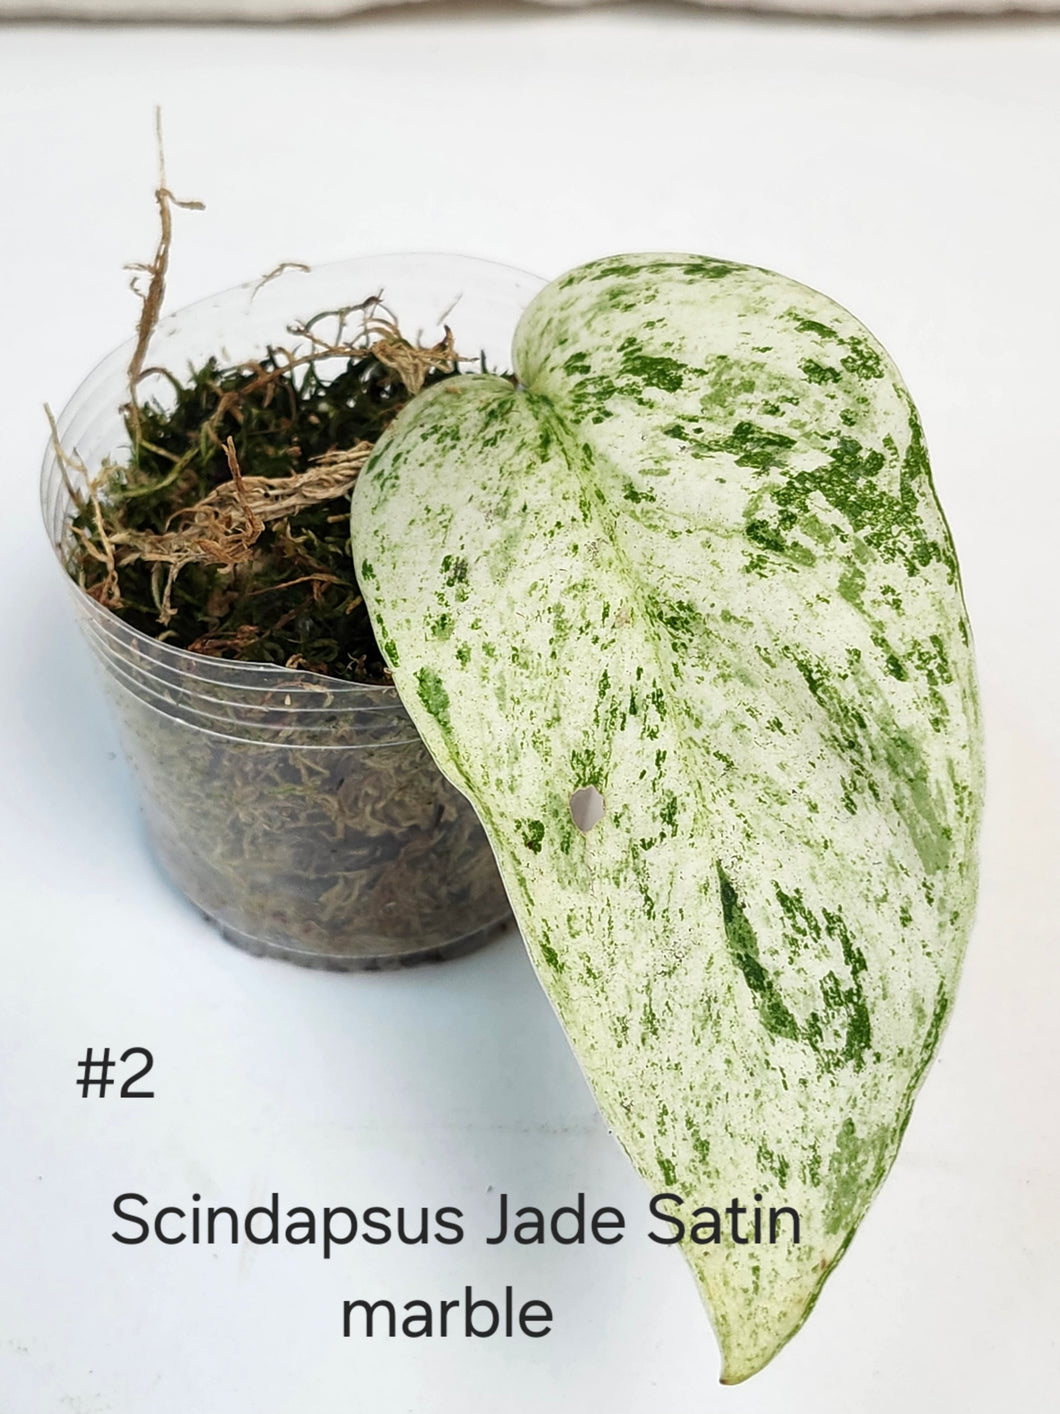 Scindapsus jade satin marble #2